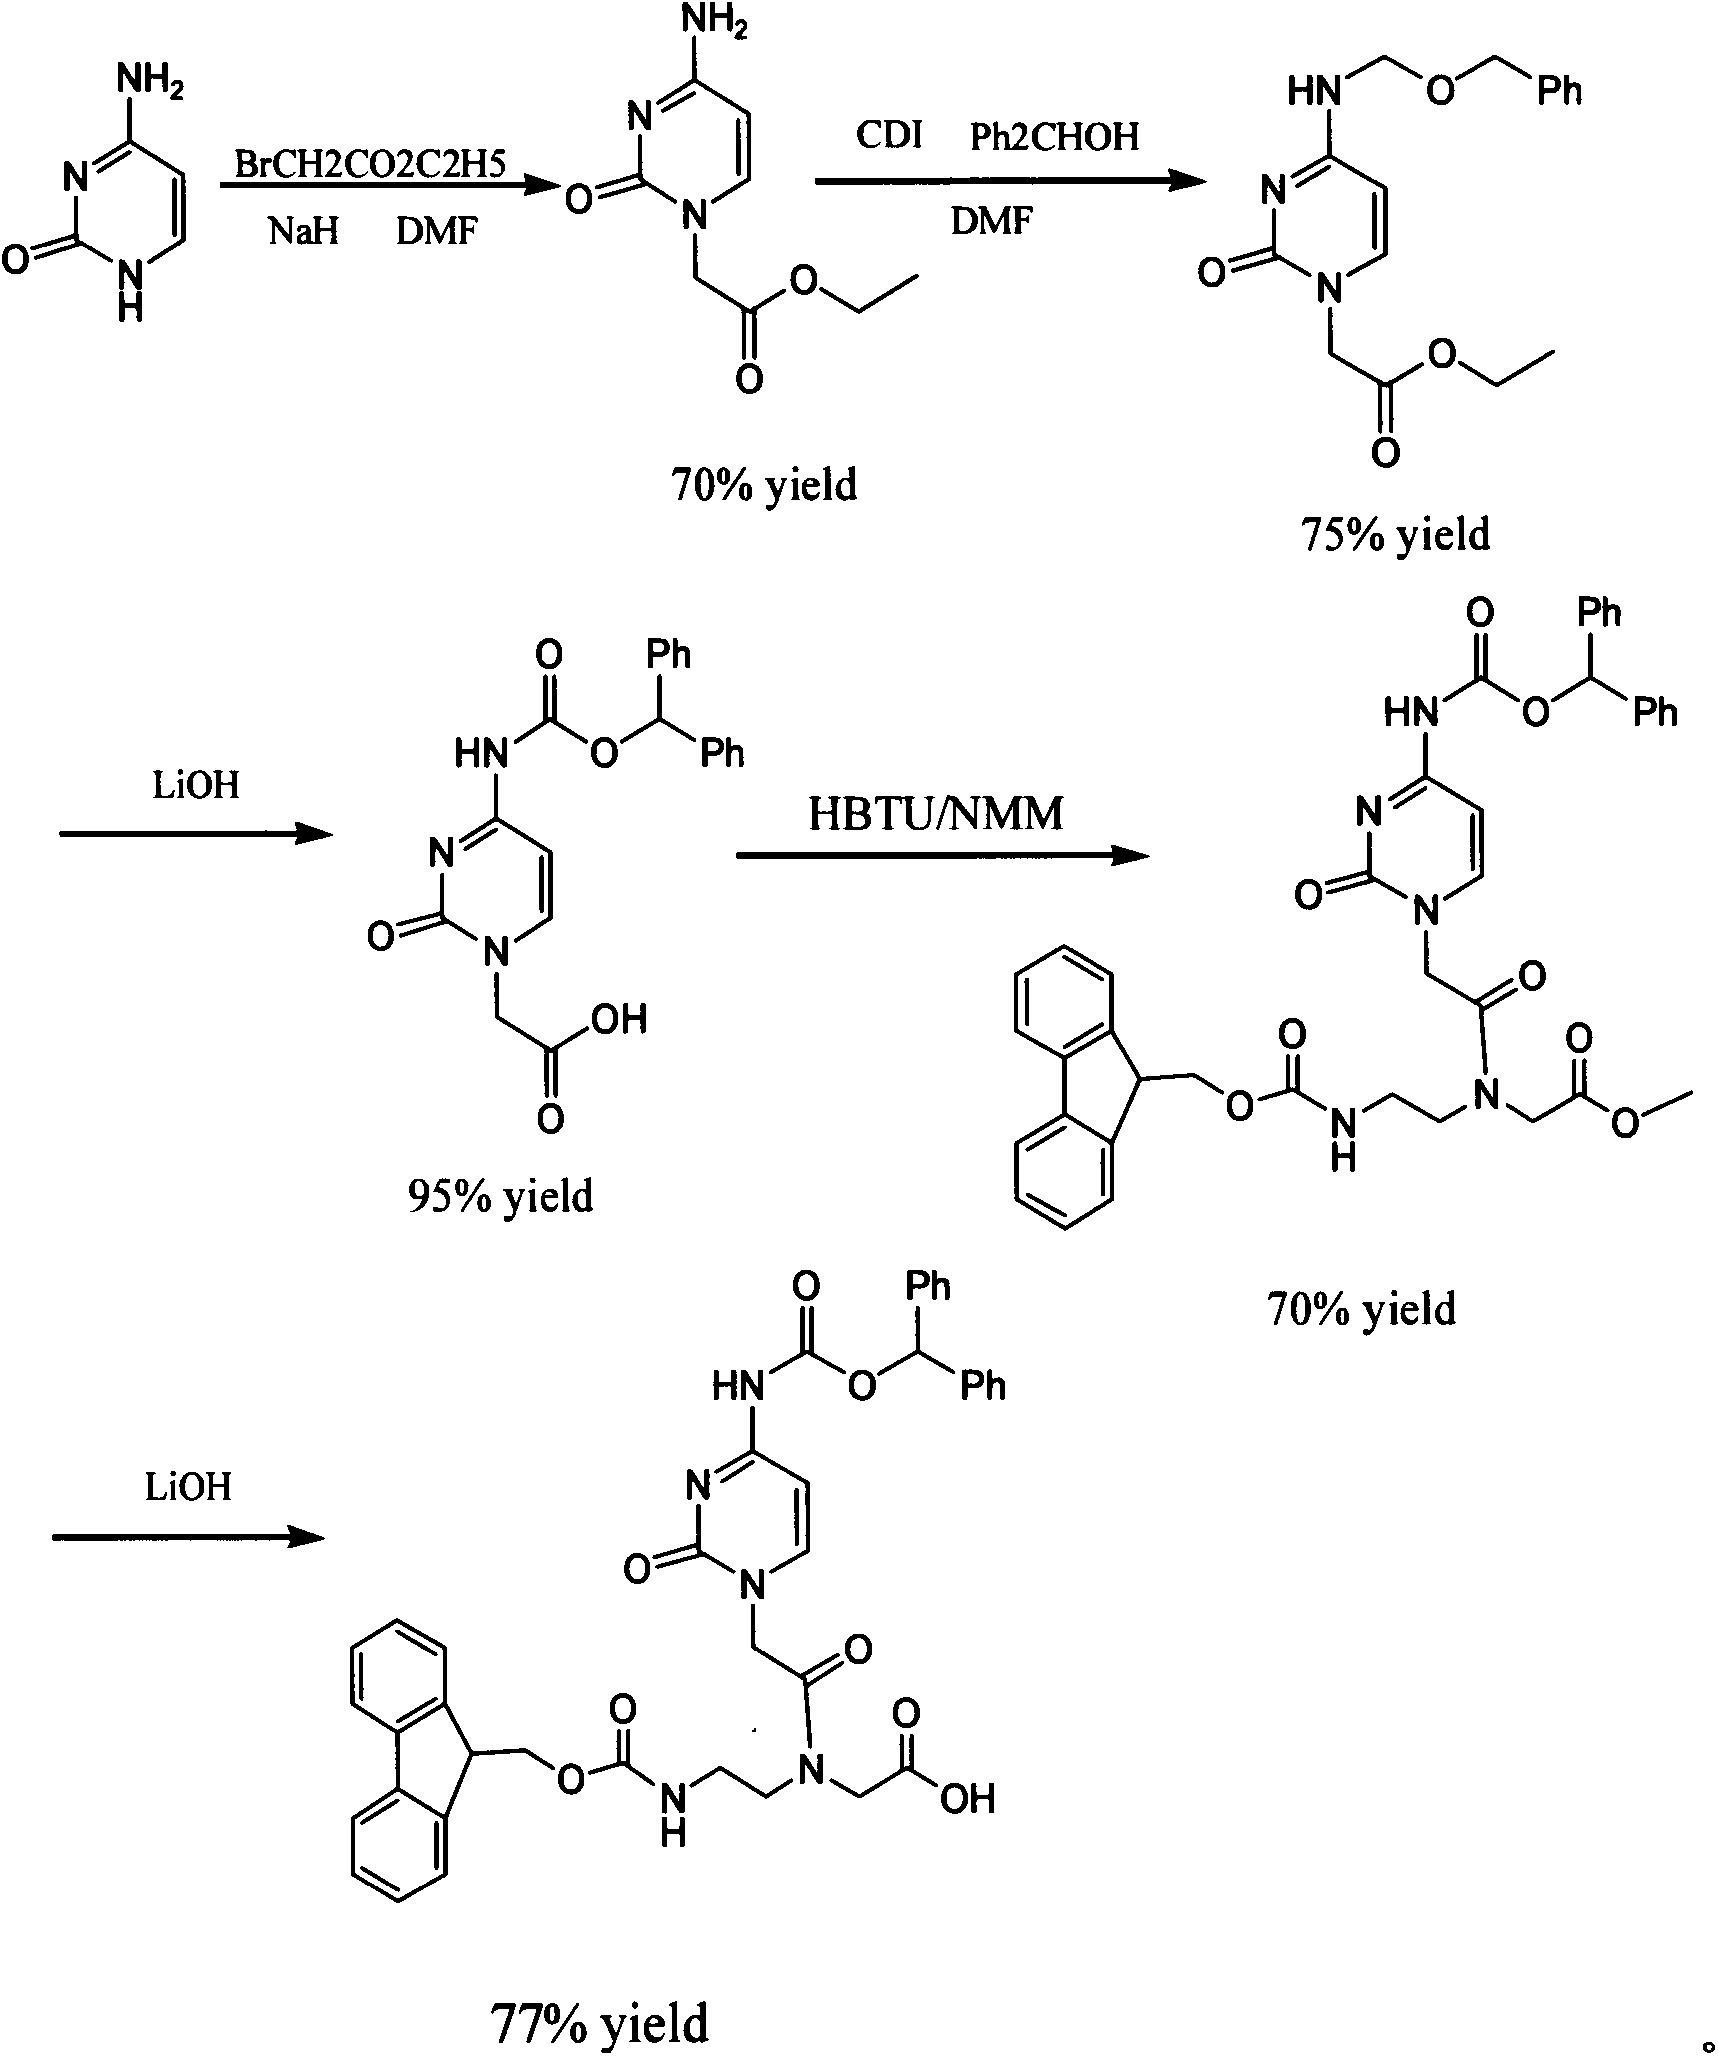 Feather weight preparation method of cytosine containing PNA (pentose nucleic acid) monomer